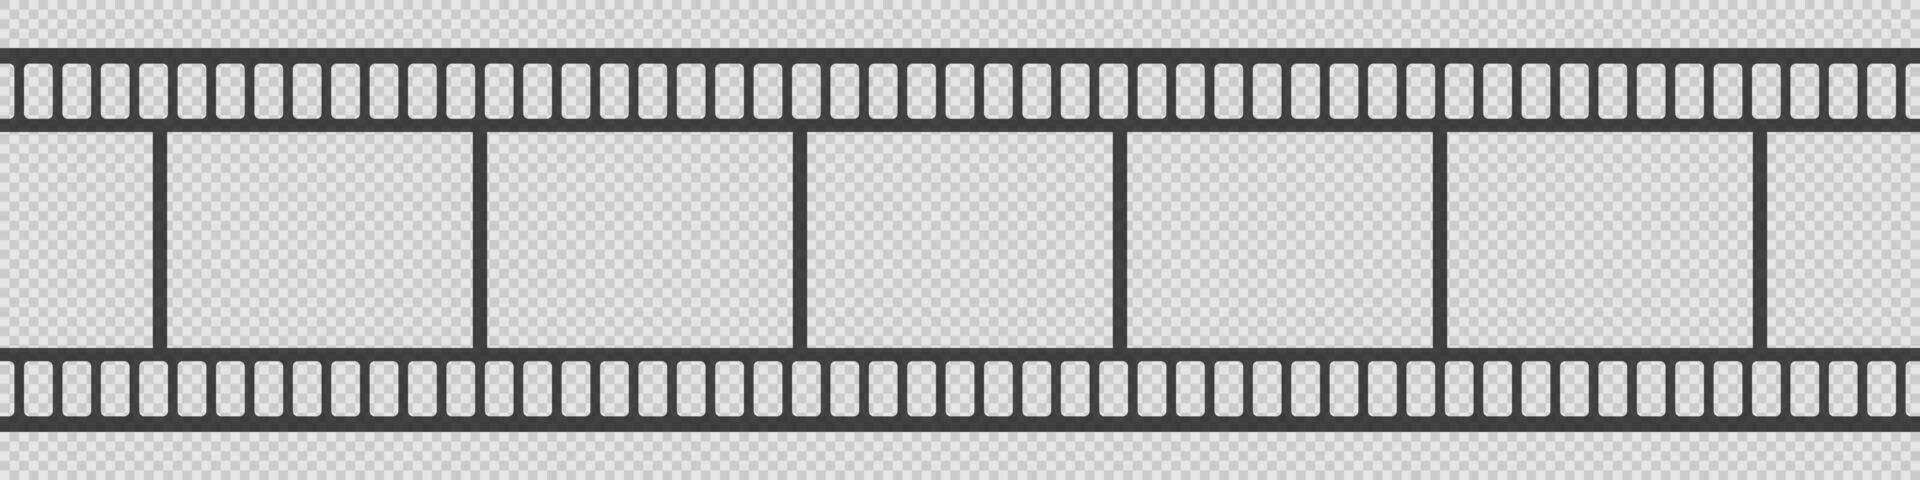 Seamless film strip vector